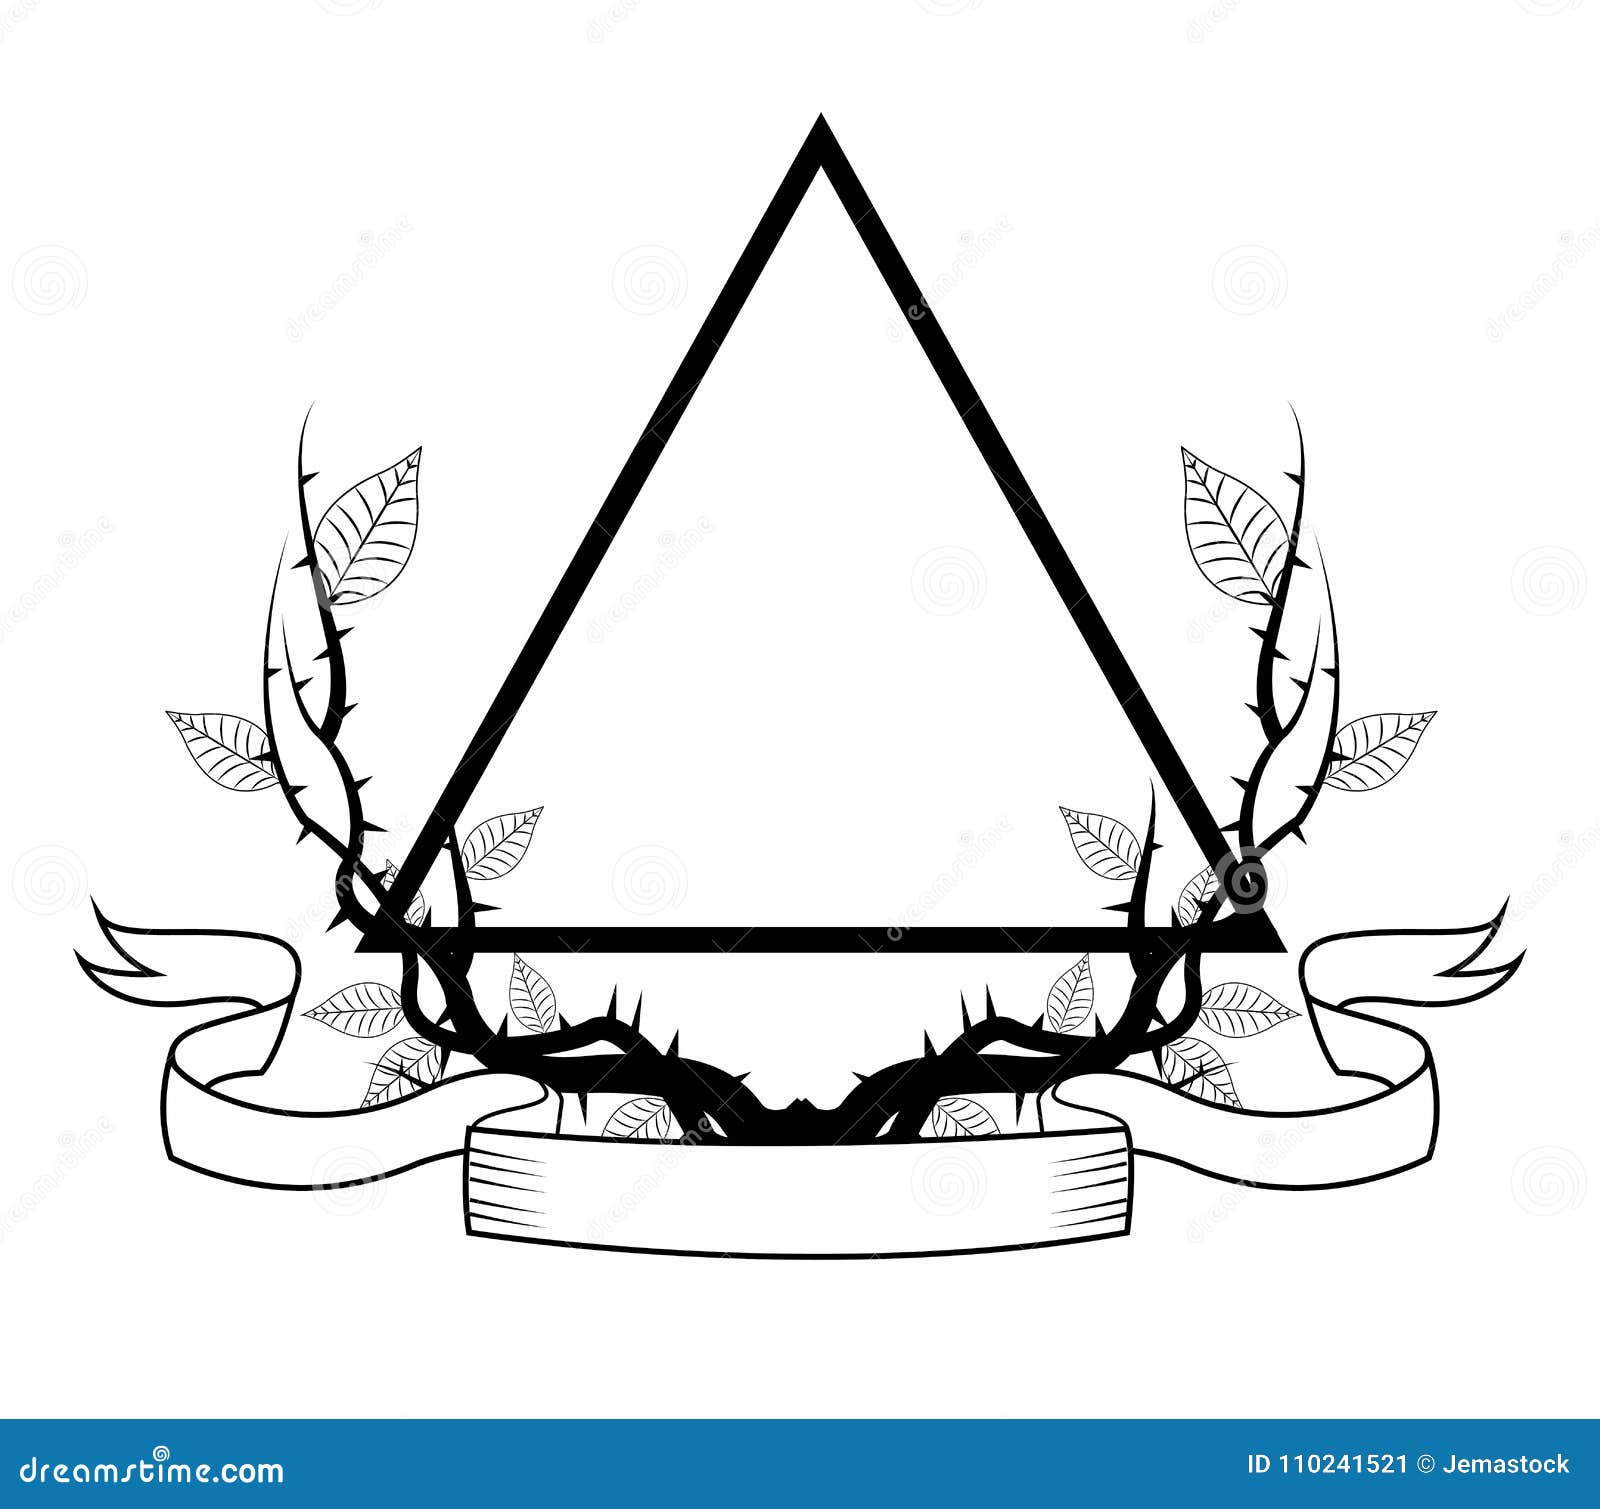 triangle branches ribbon icon tattoo art urban style culture theme vector illustration design 110241521